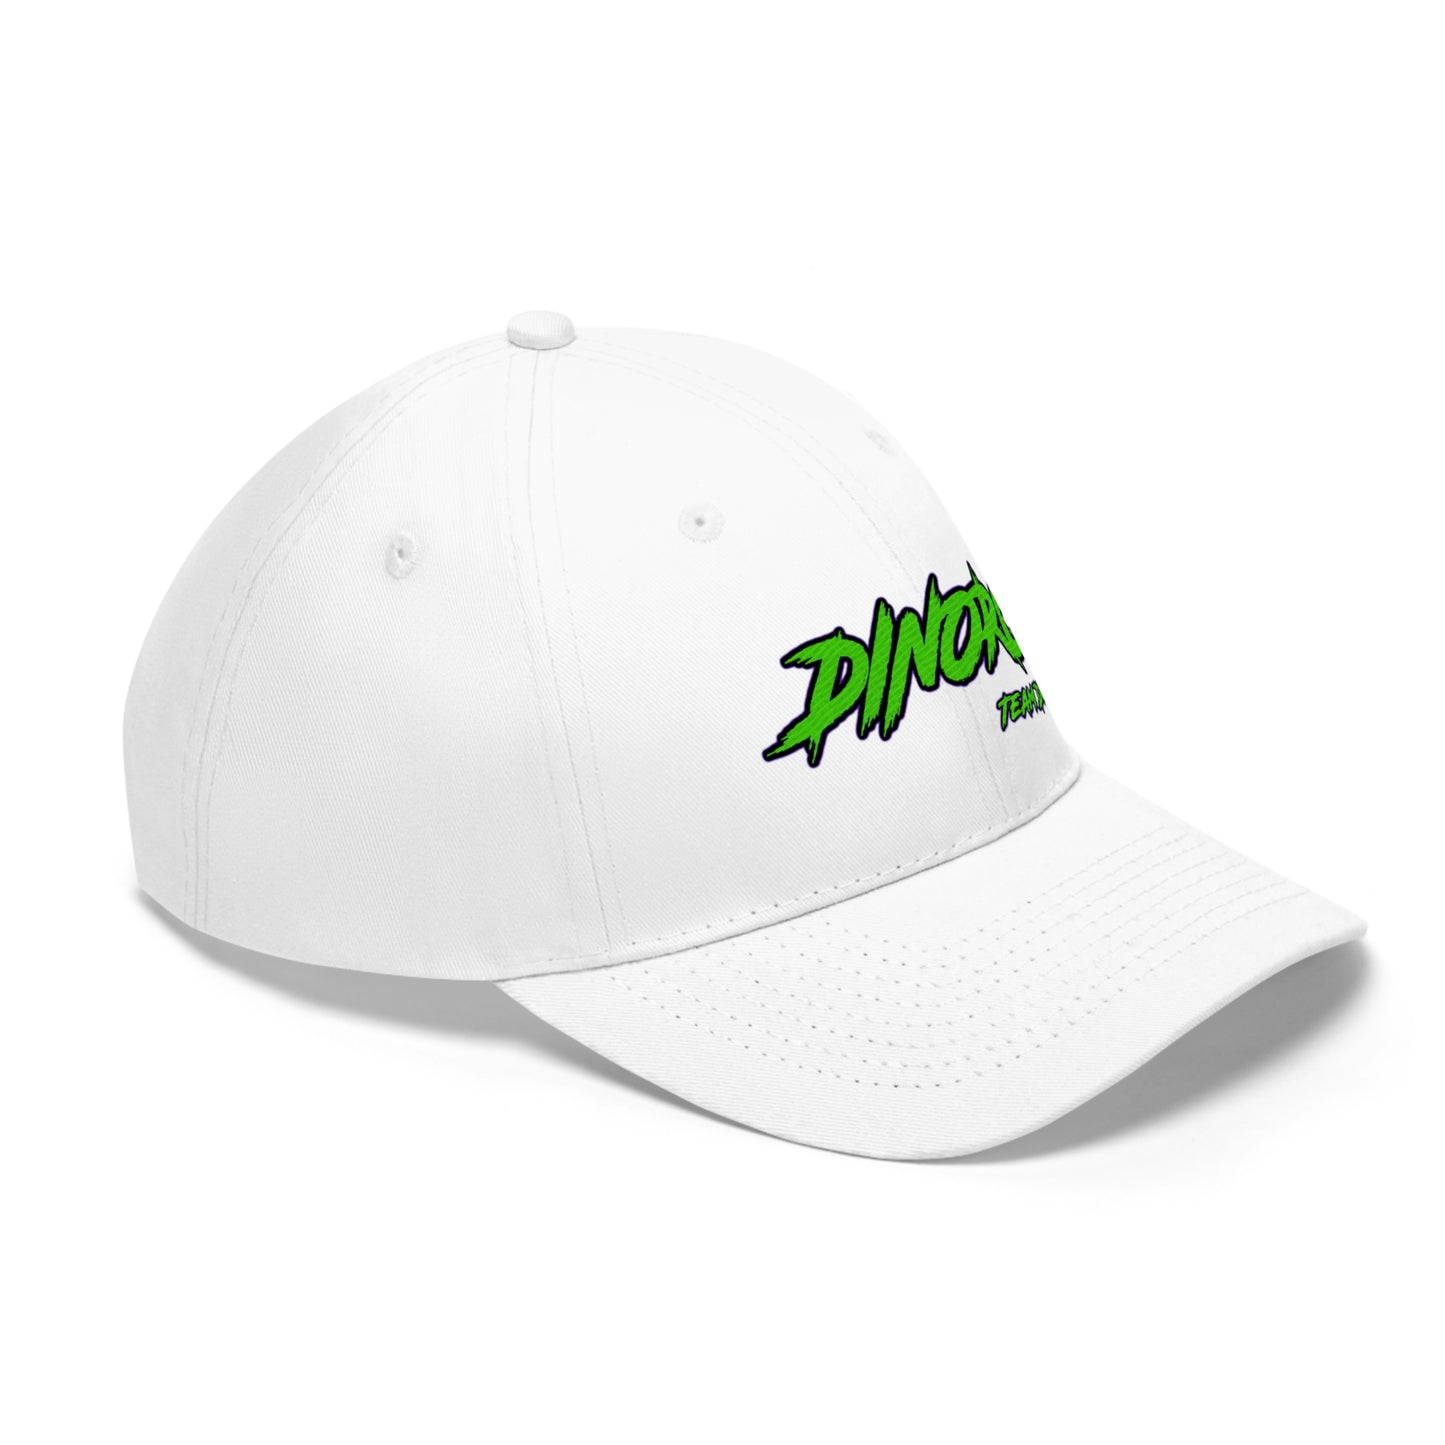 DinoRC Logo Hat